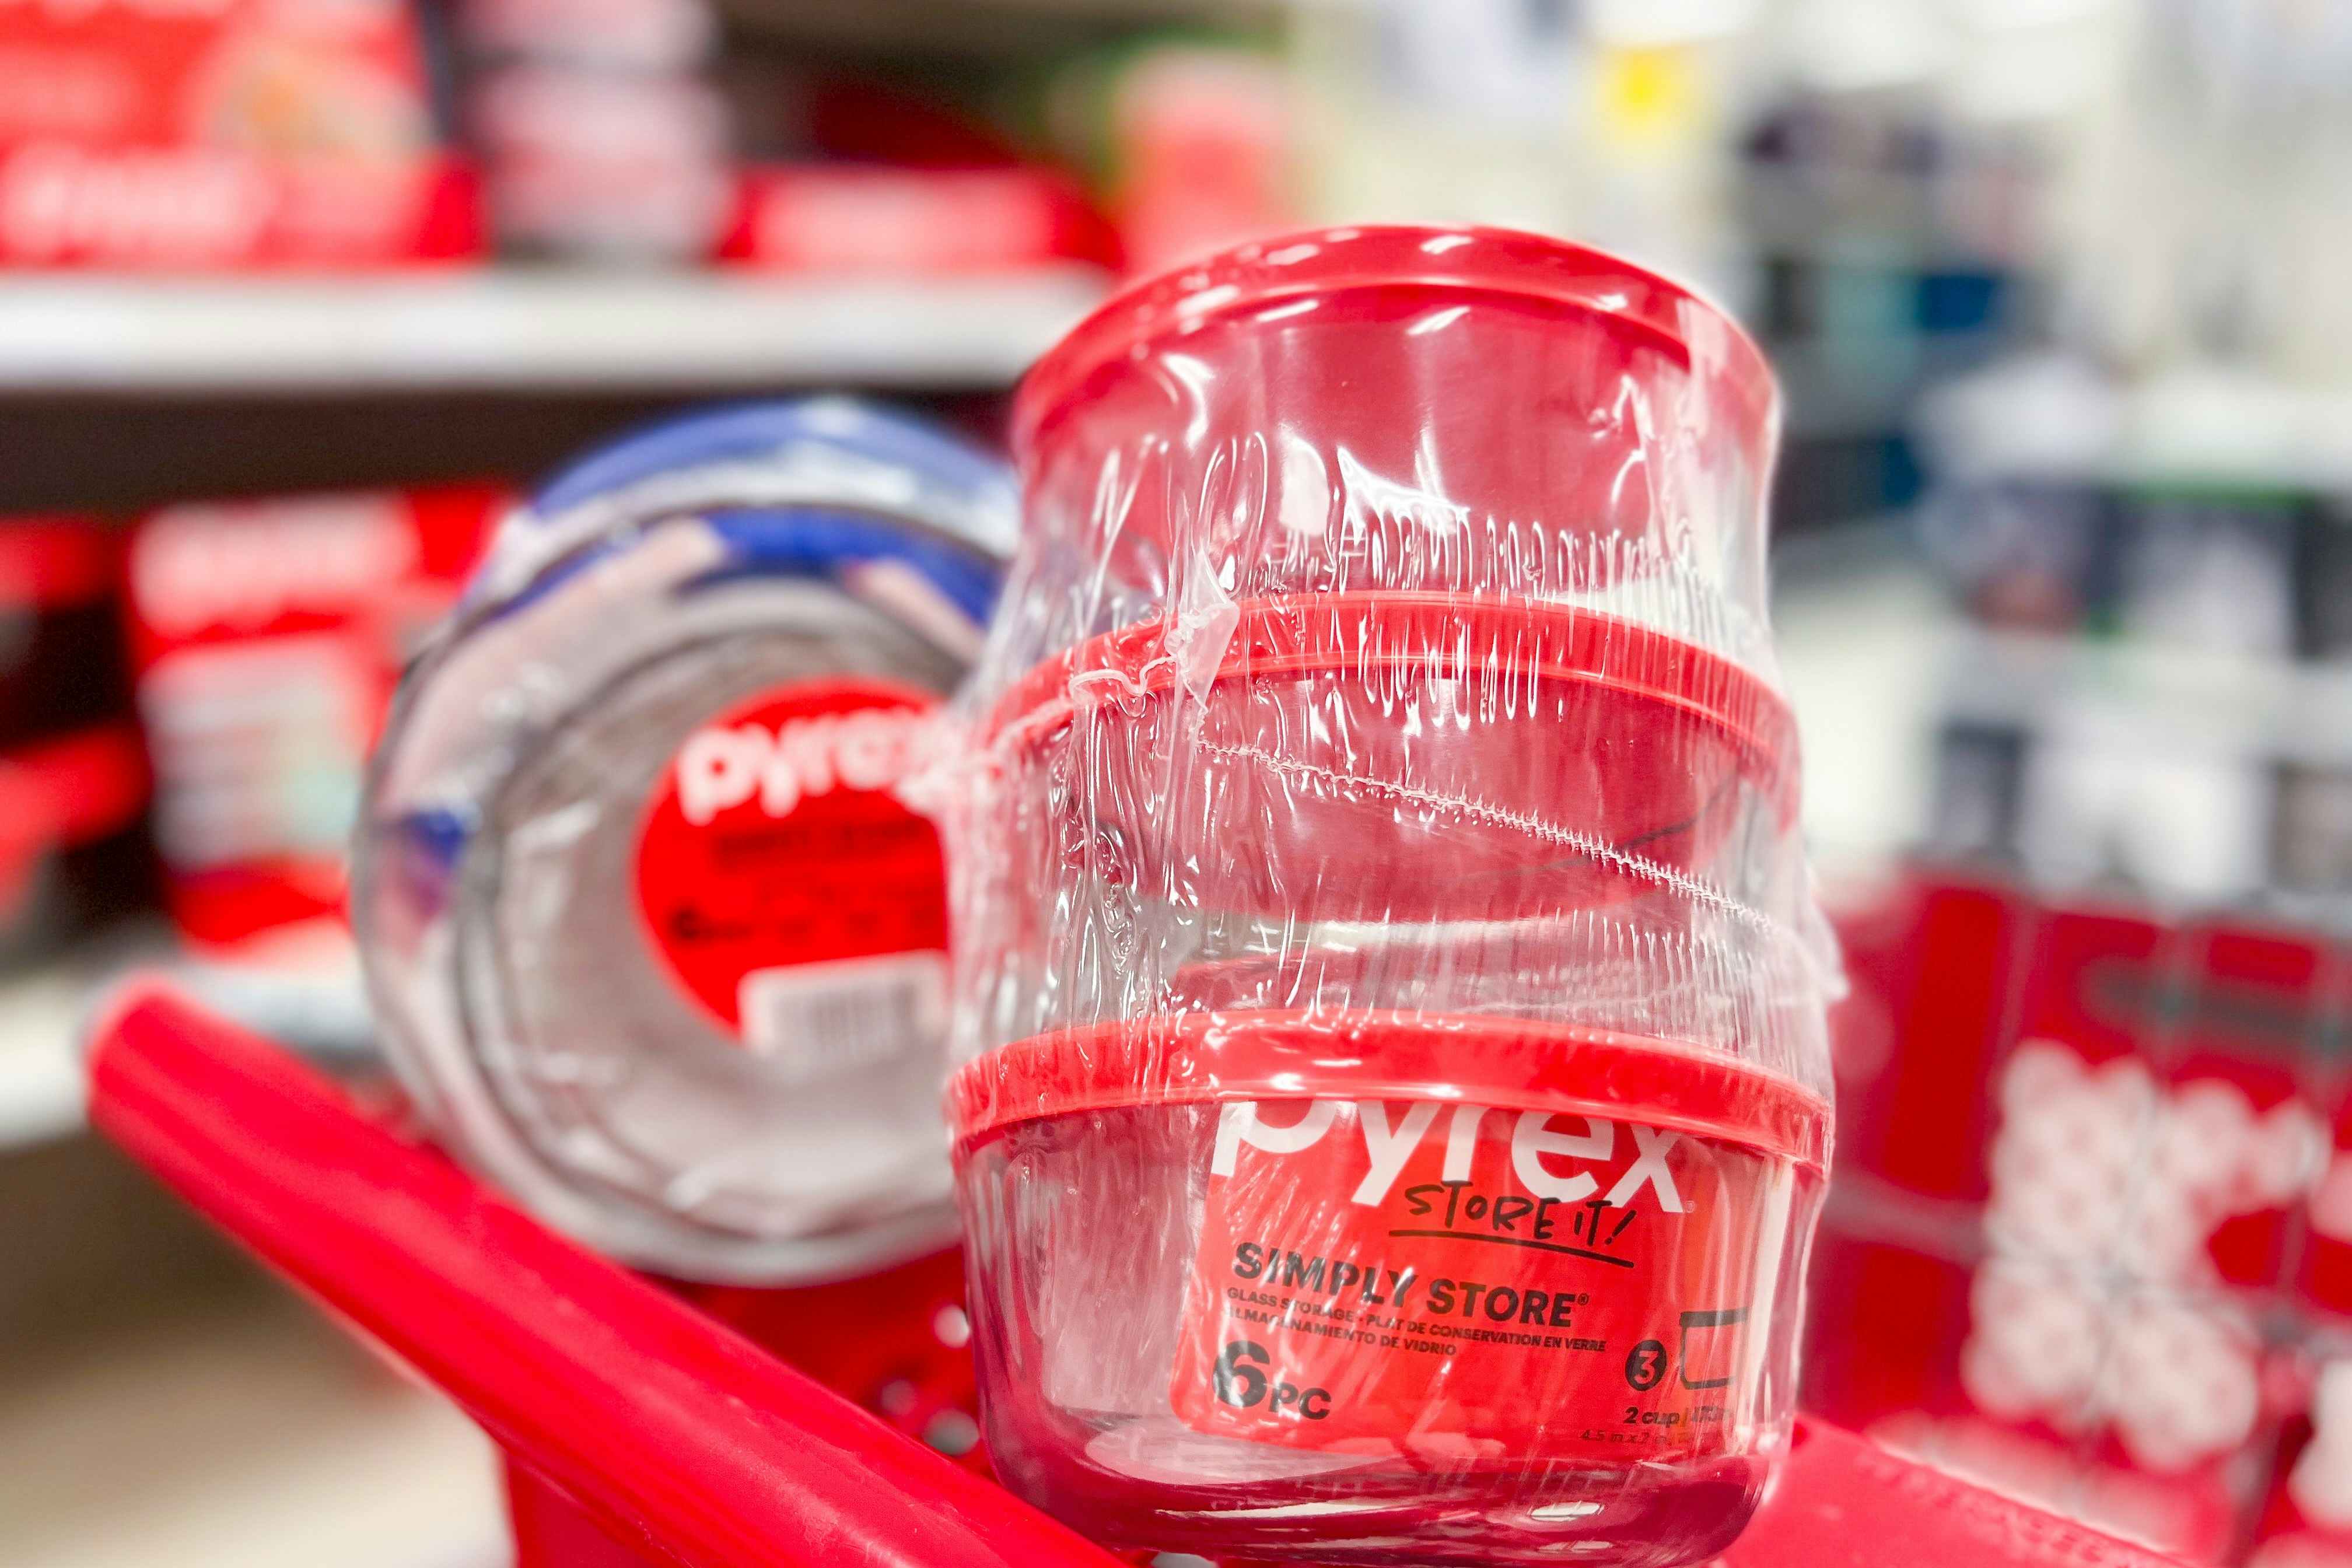 Pyrex 6-Piece Glass Food Storage Set, Only $6.45 at Target